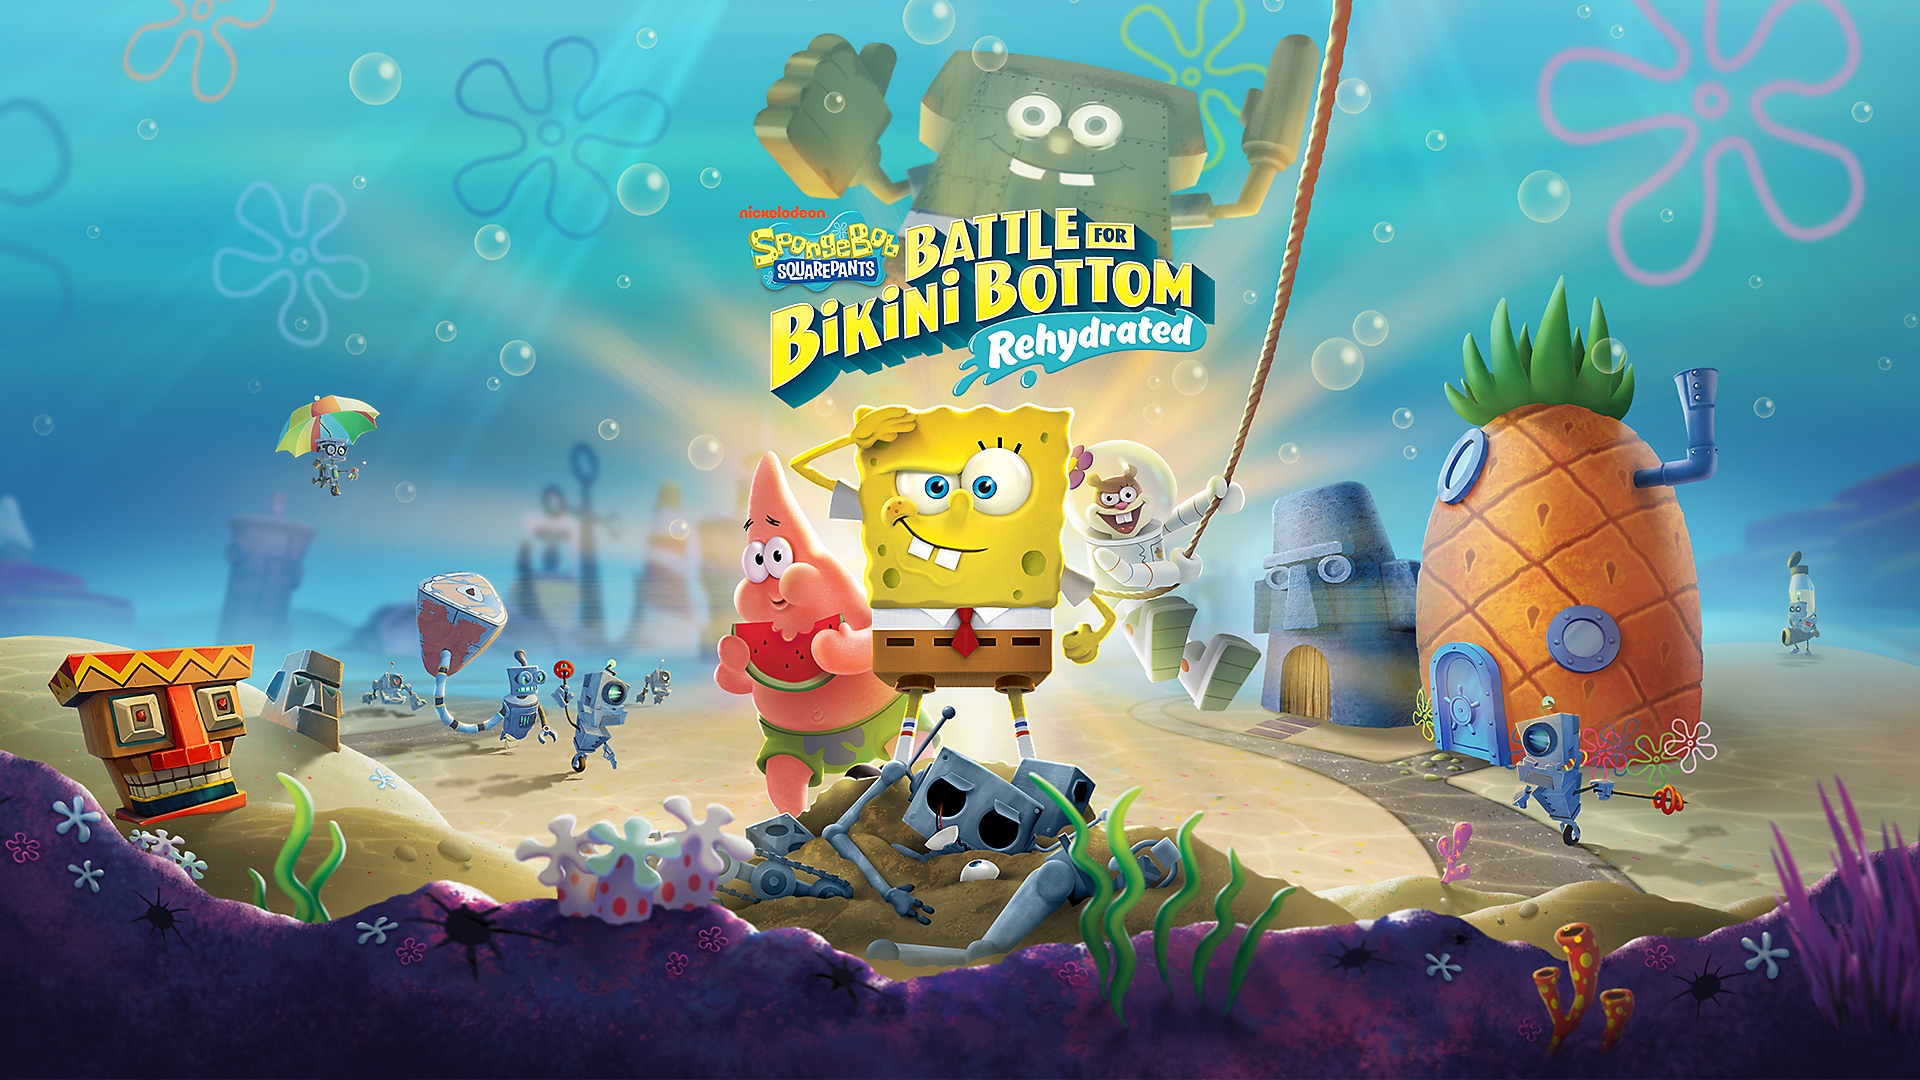 SpongeBob salutes while Patrick eats a pineapple in Bikini Bottom for SpongeBob SquarePants: Battle for Bikini Bottom Rehydrated on PS4